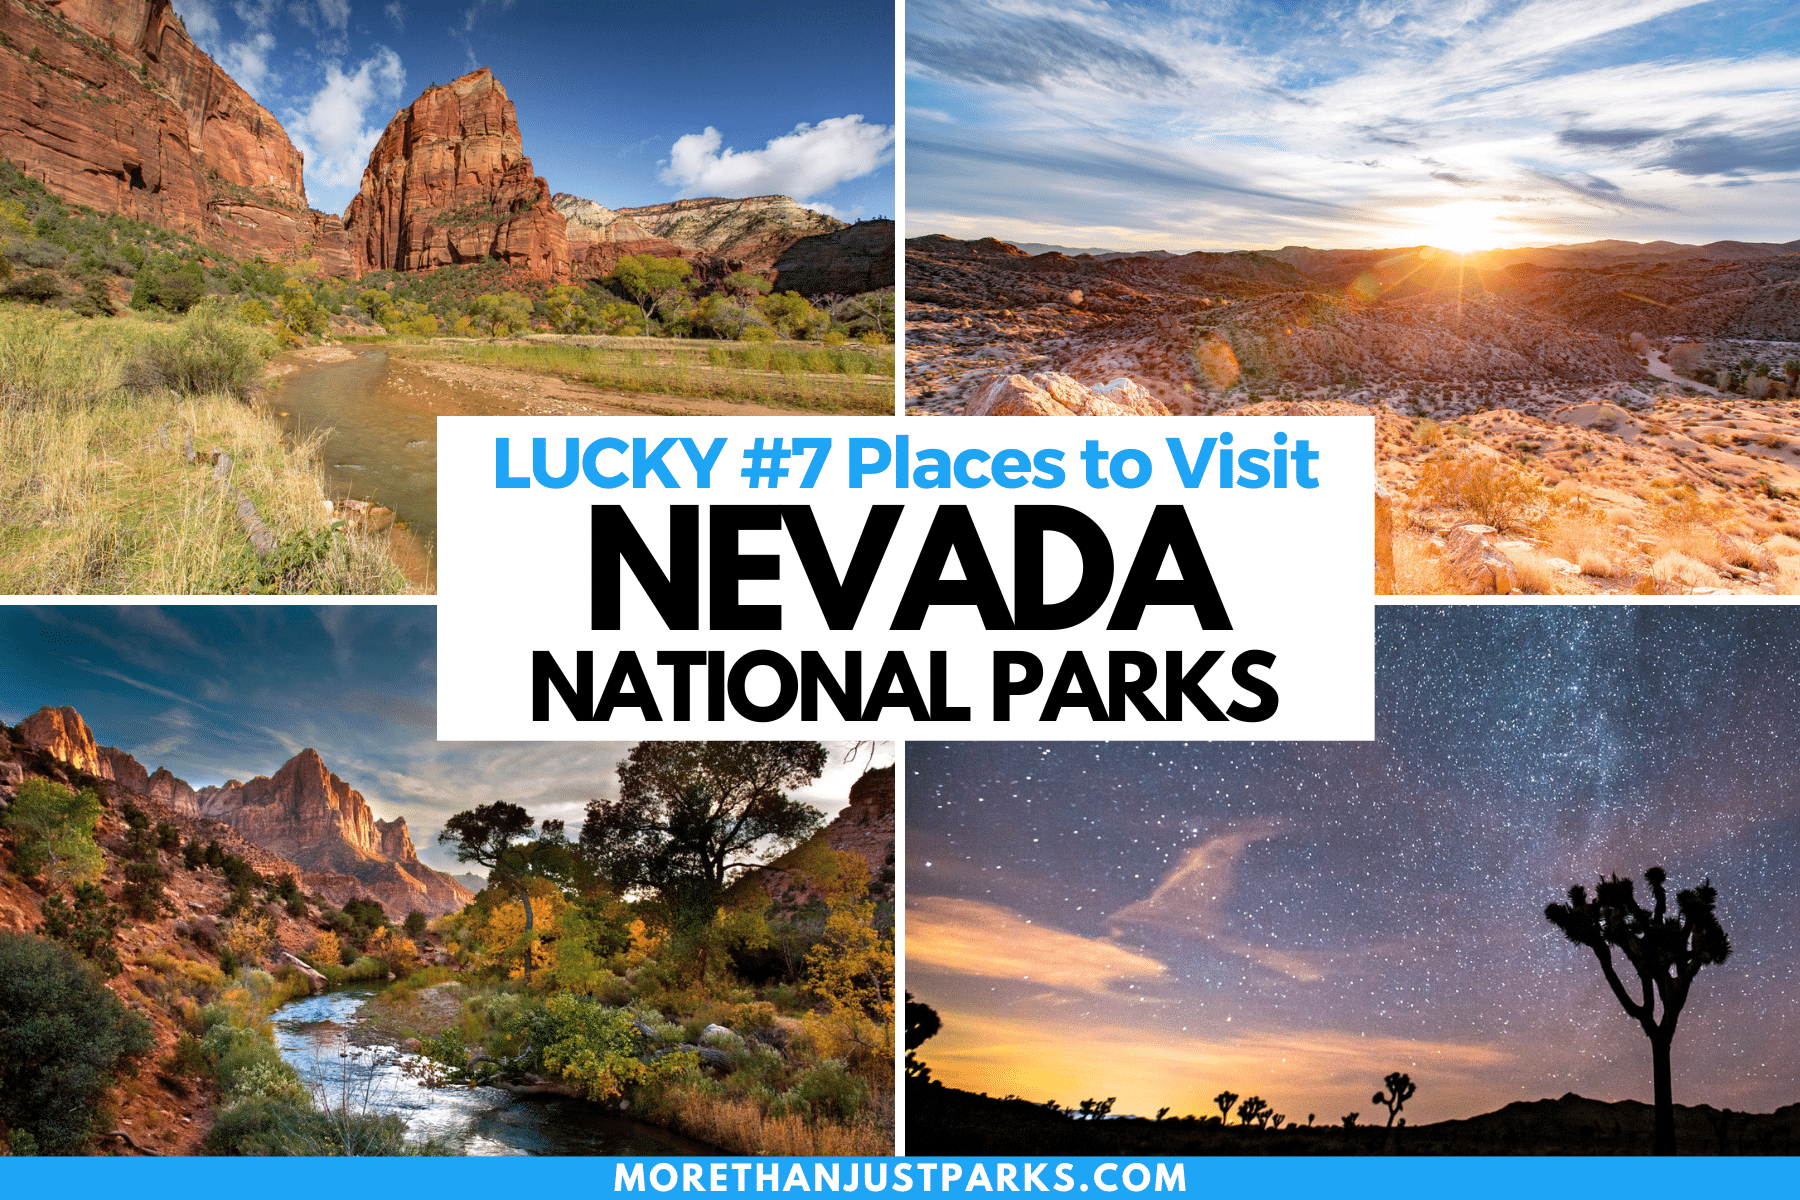 Nevada National Parks